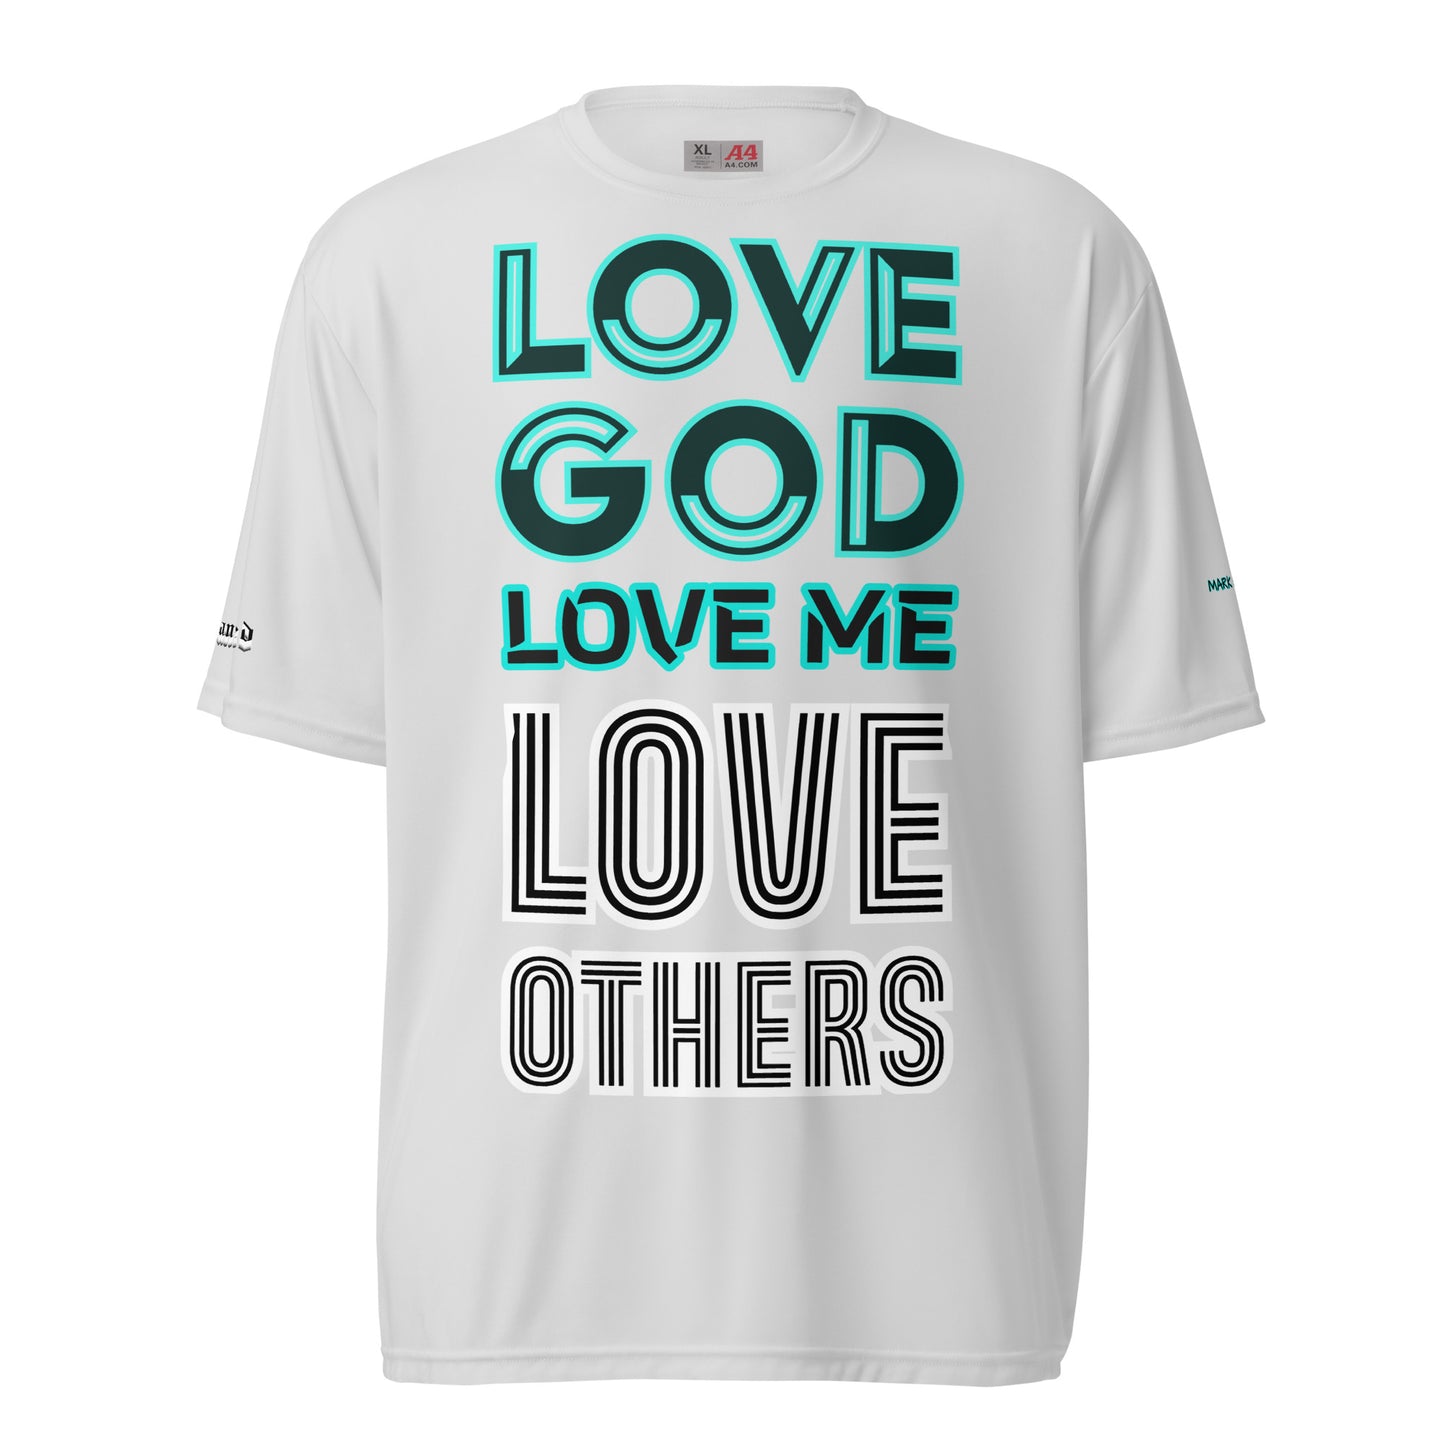 LOVE GOD, LOVE ME, LOVE OTHERS- Unisex performance crew neck t-shirt